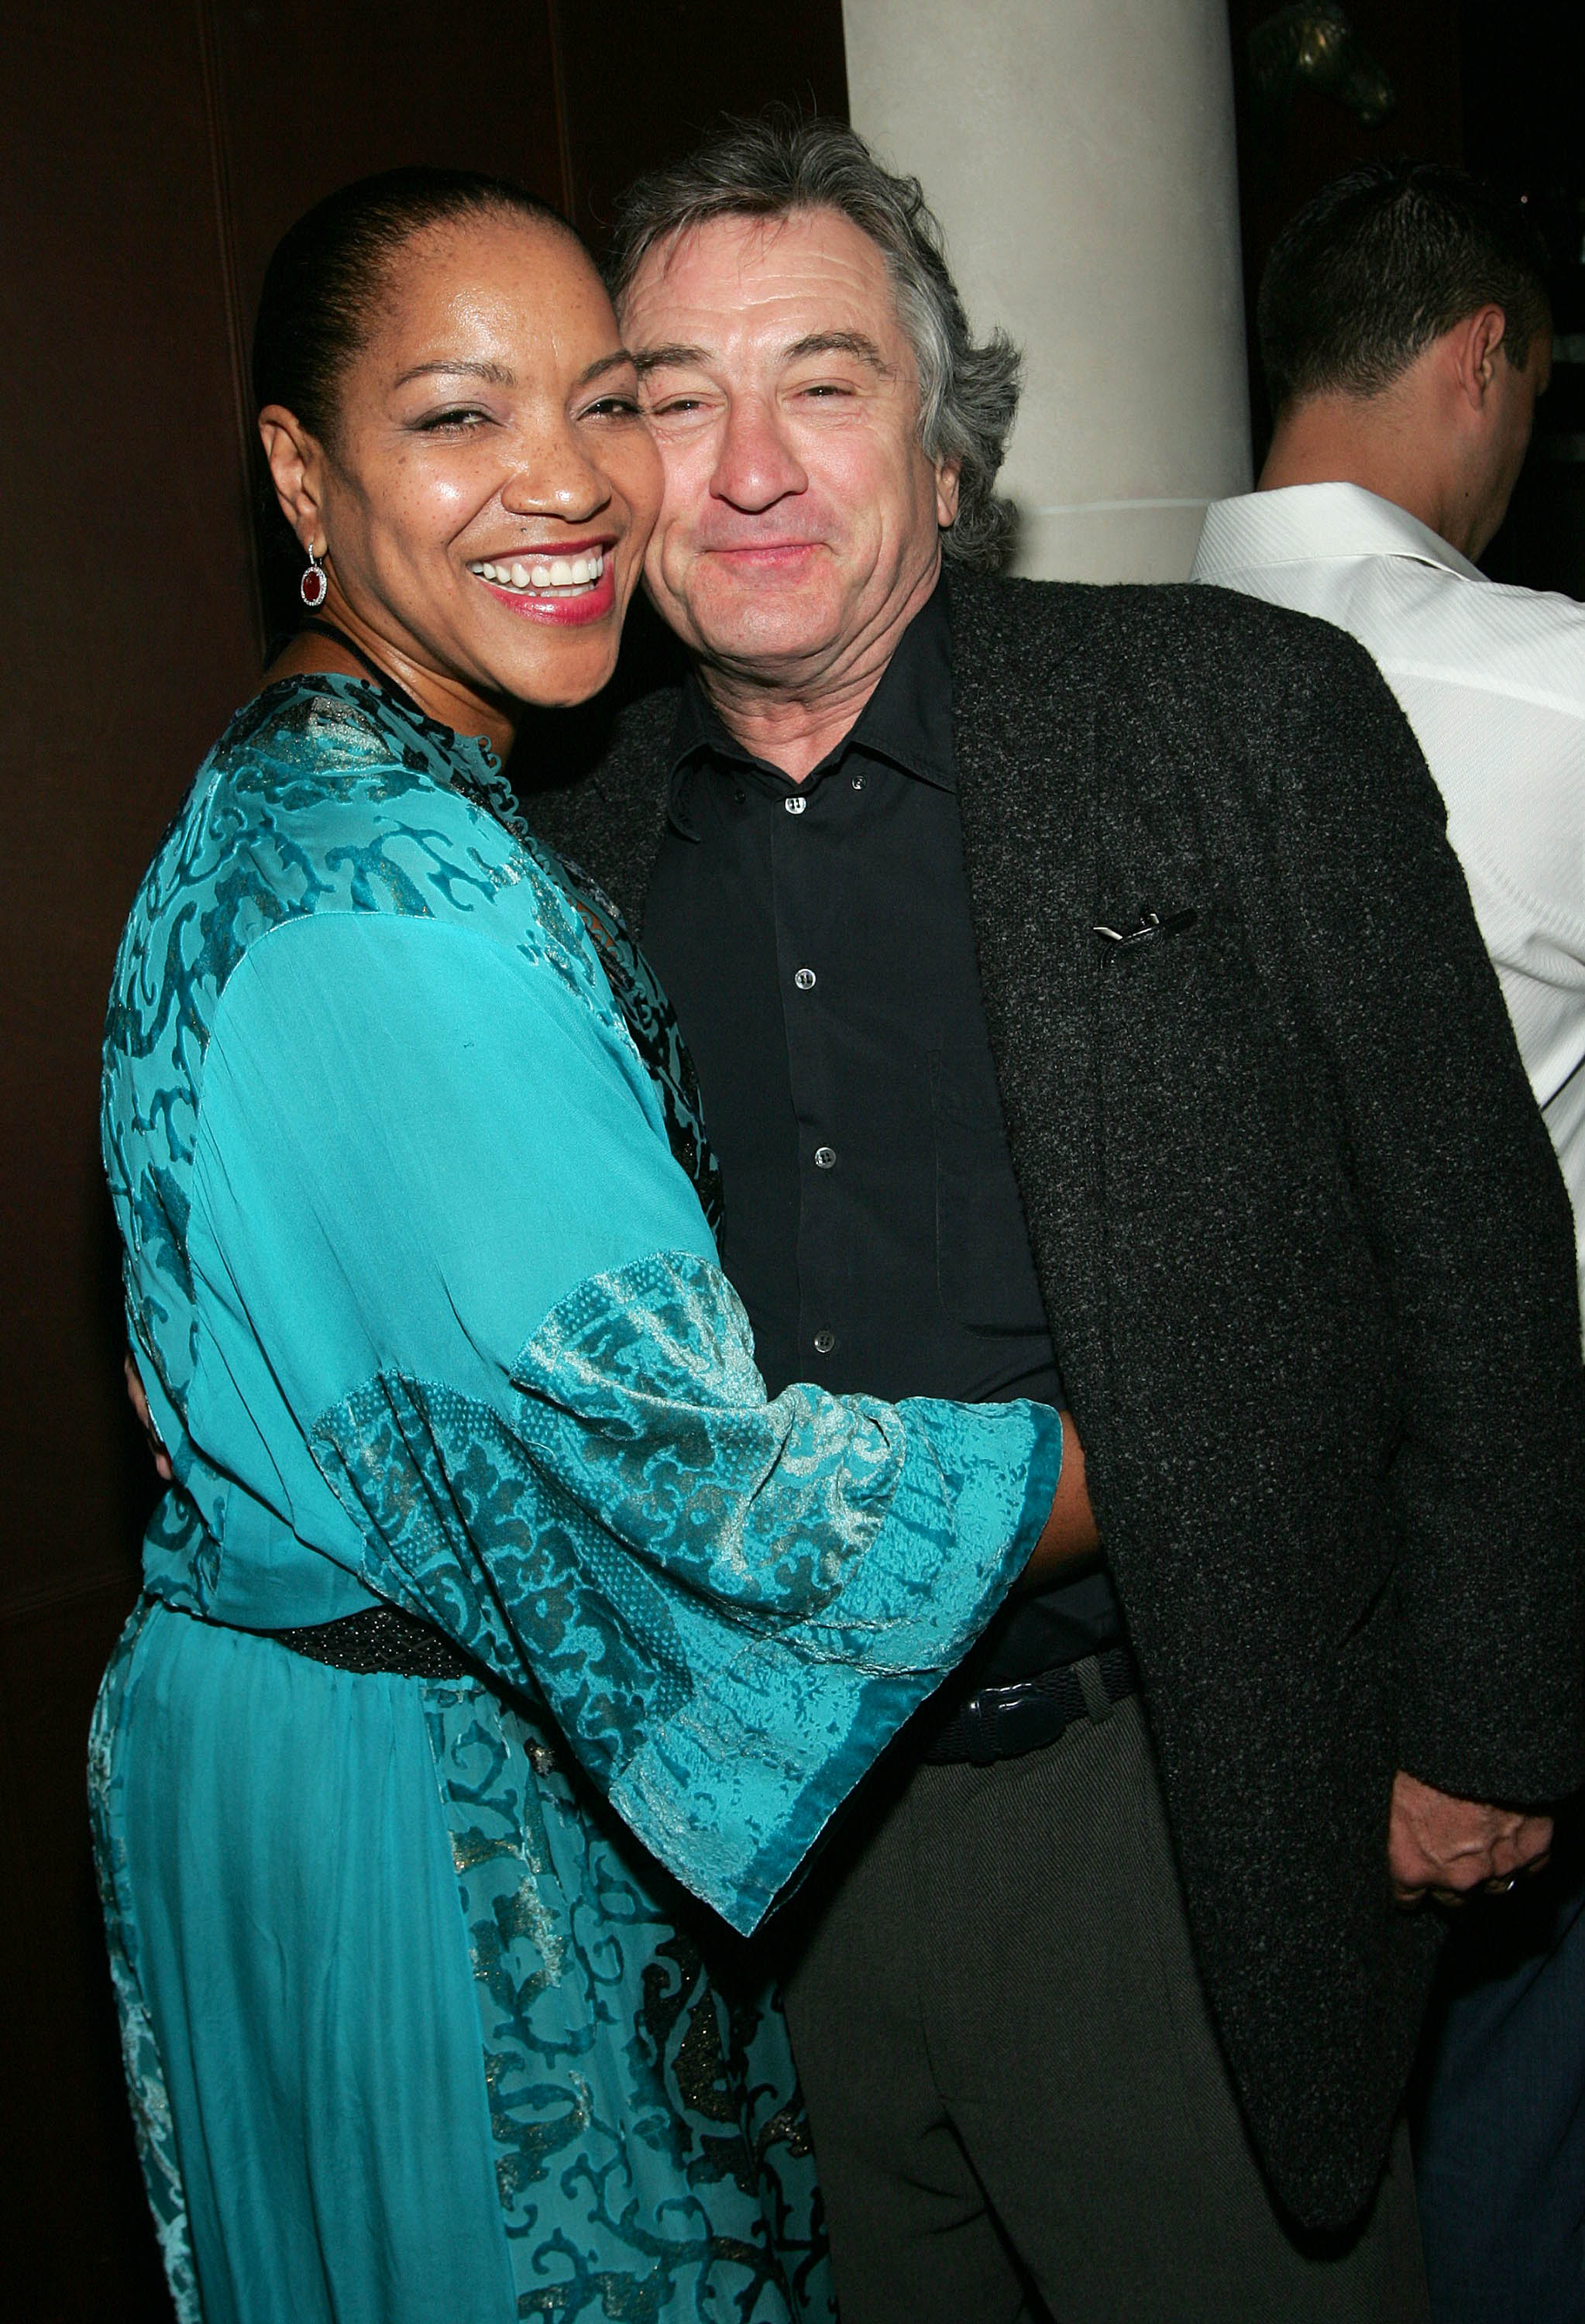 Robert De Niro and Grace Hightower in New York 2005. | Source: Getty Images